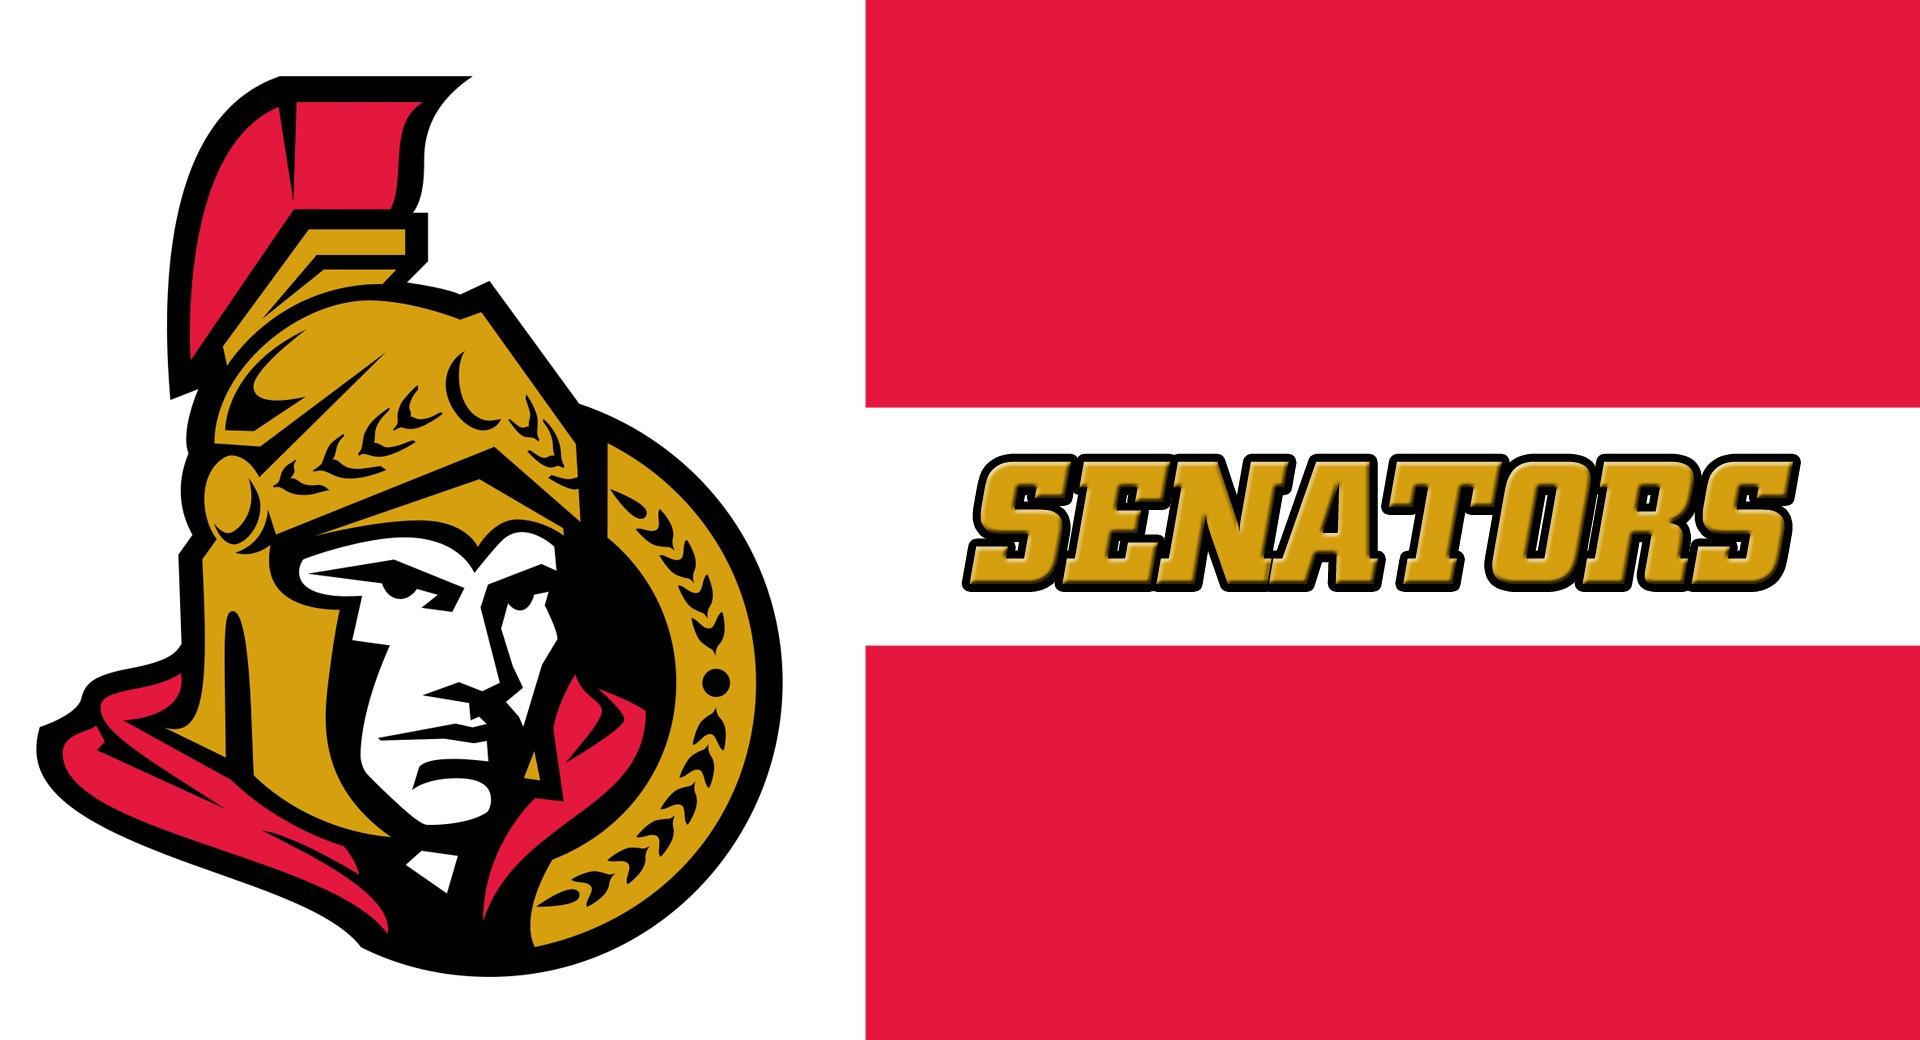 Ottawa Senators at 1280 x 960 size wallpapers HD quality